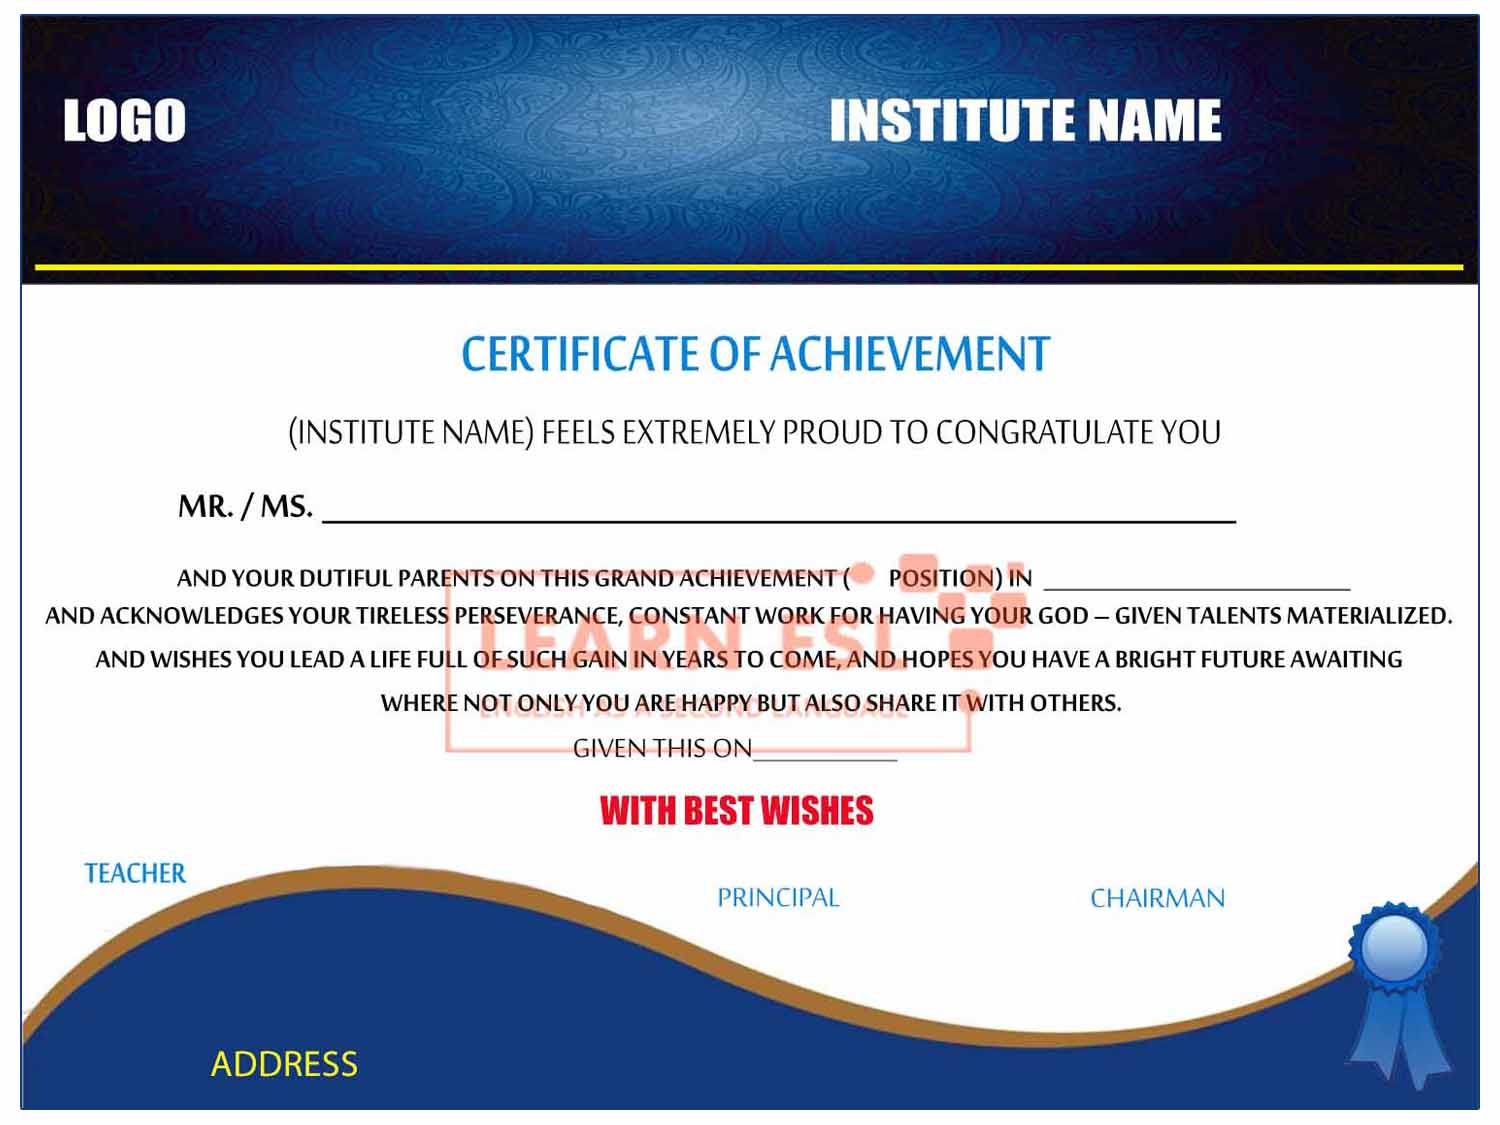 Certificate of Achievement Sample & Script in English - Learn ESL With Regard To Felicitation Certificate Template